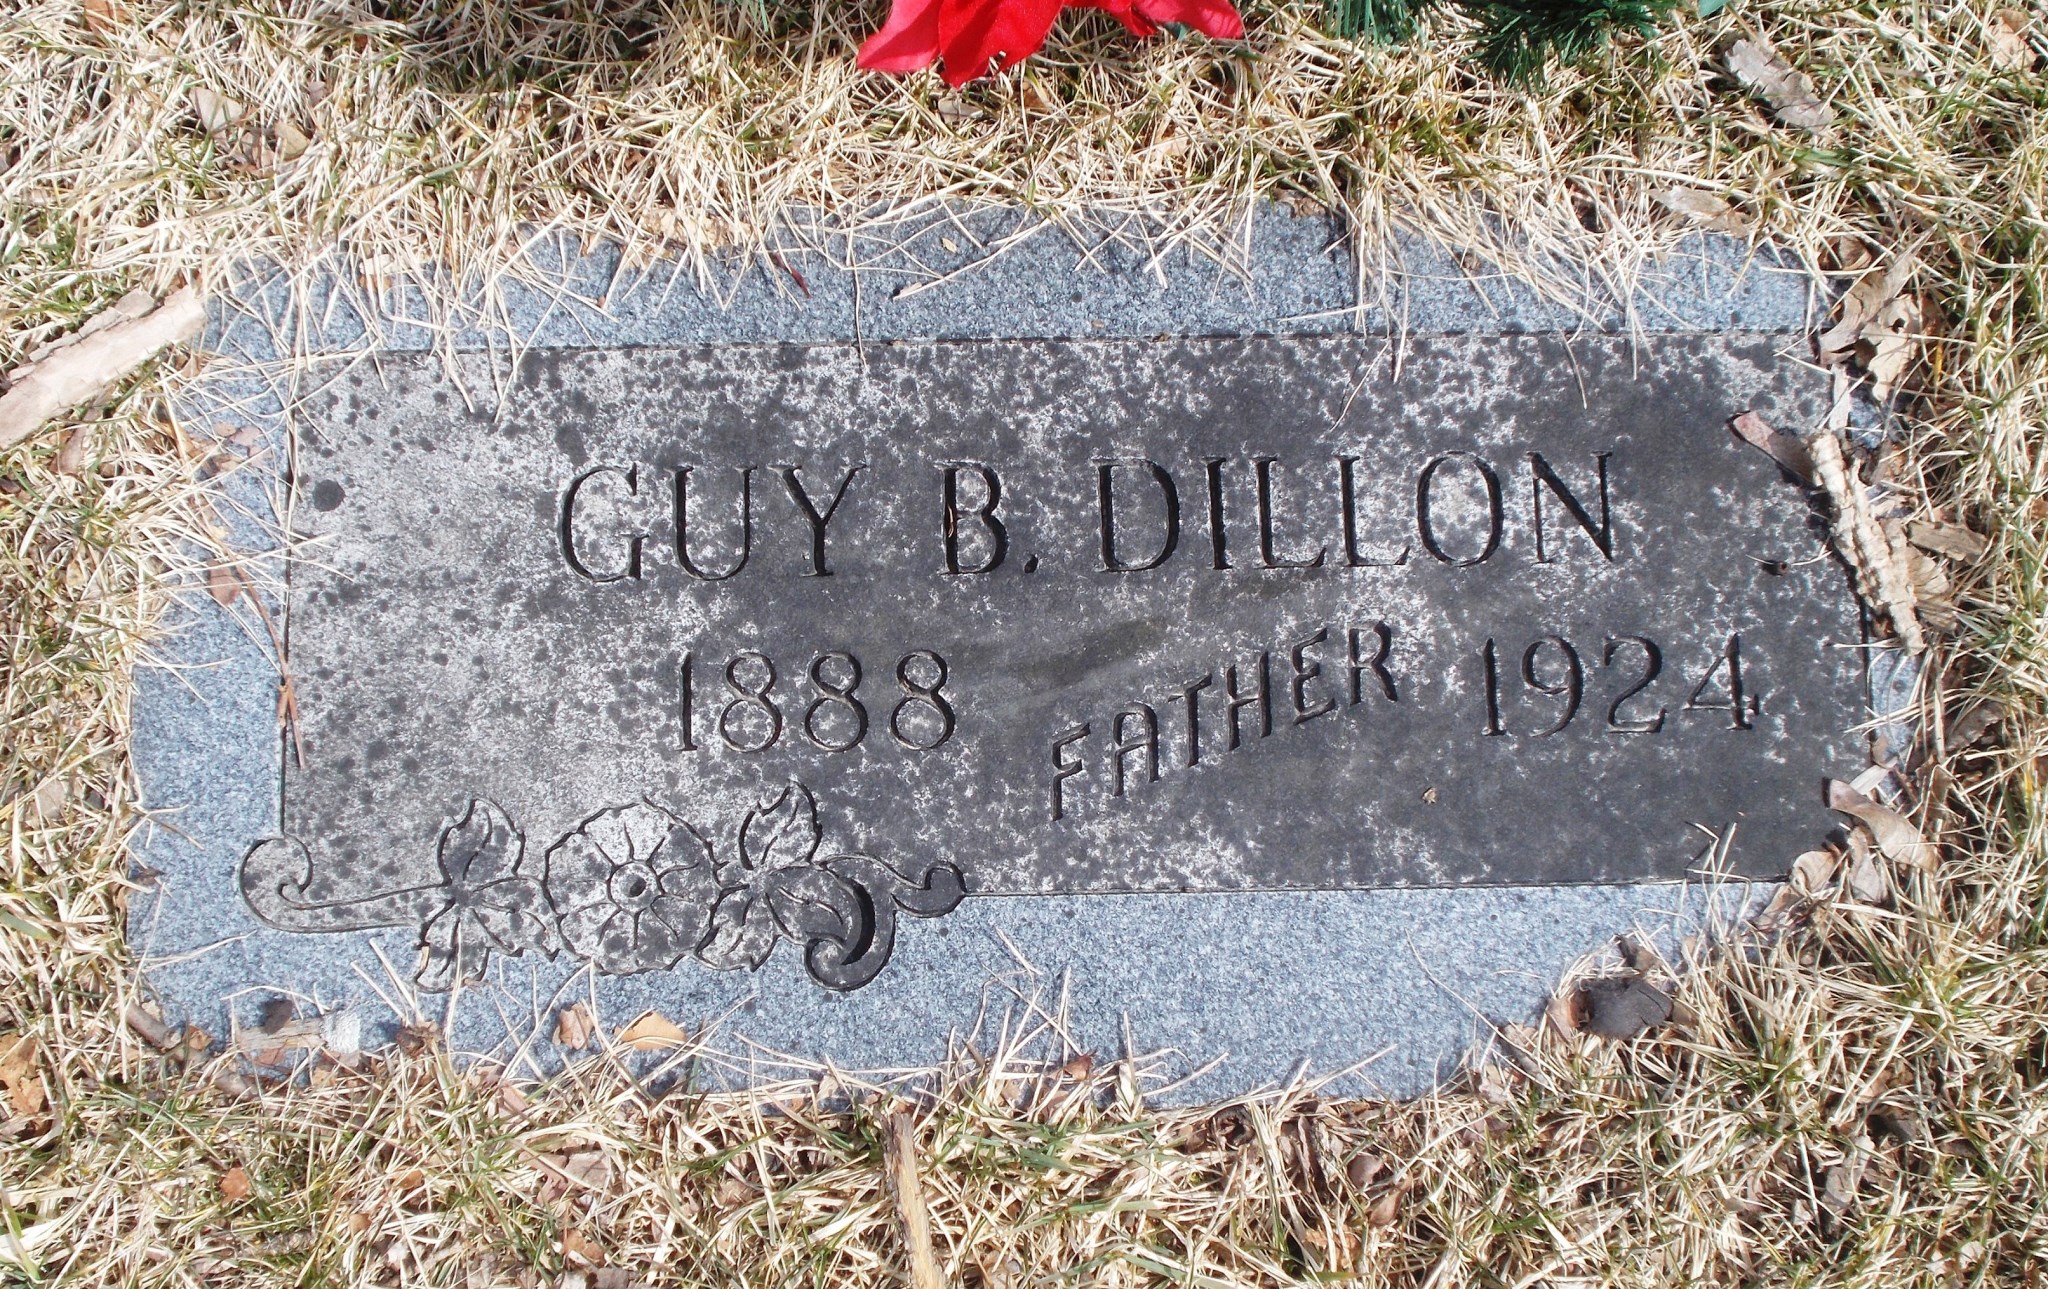 Guy B Dillon